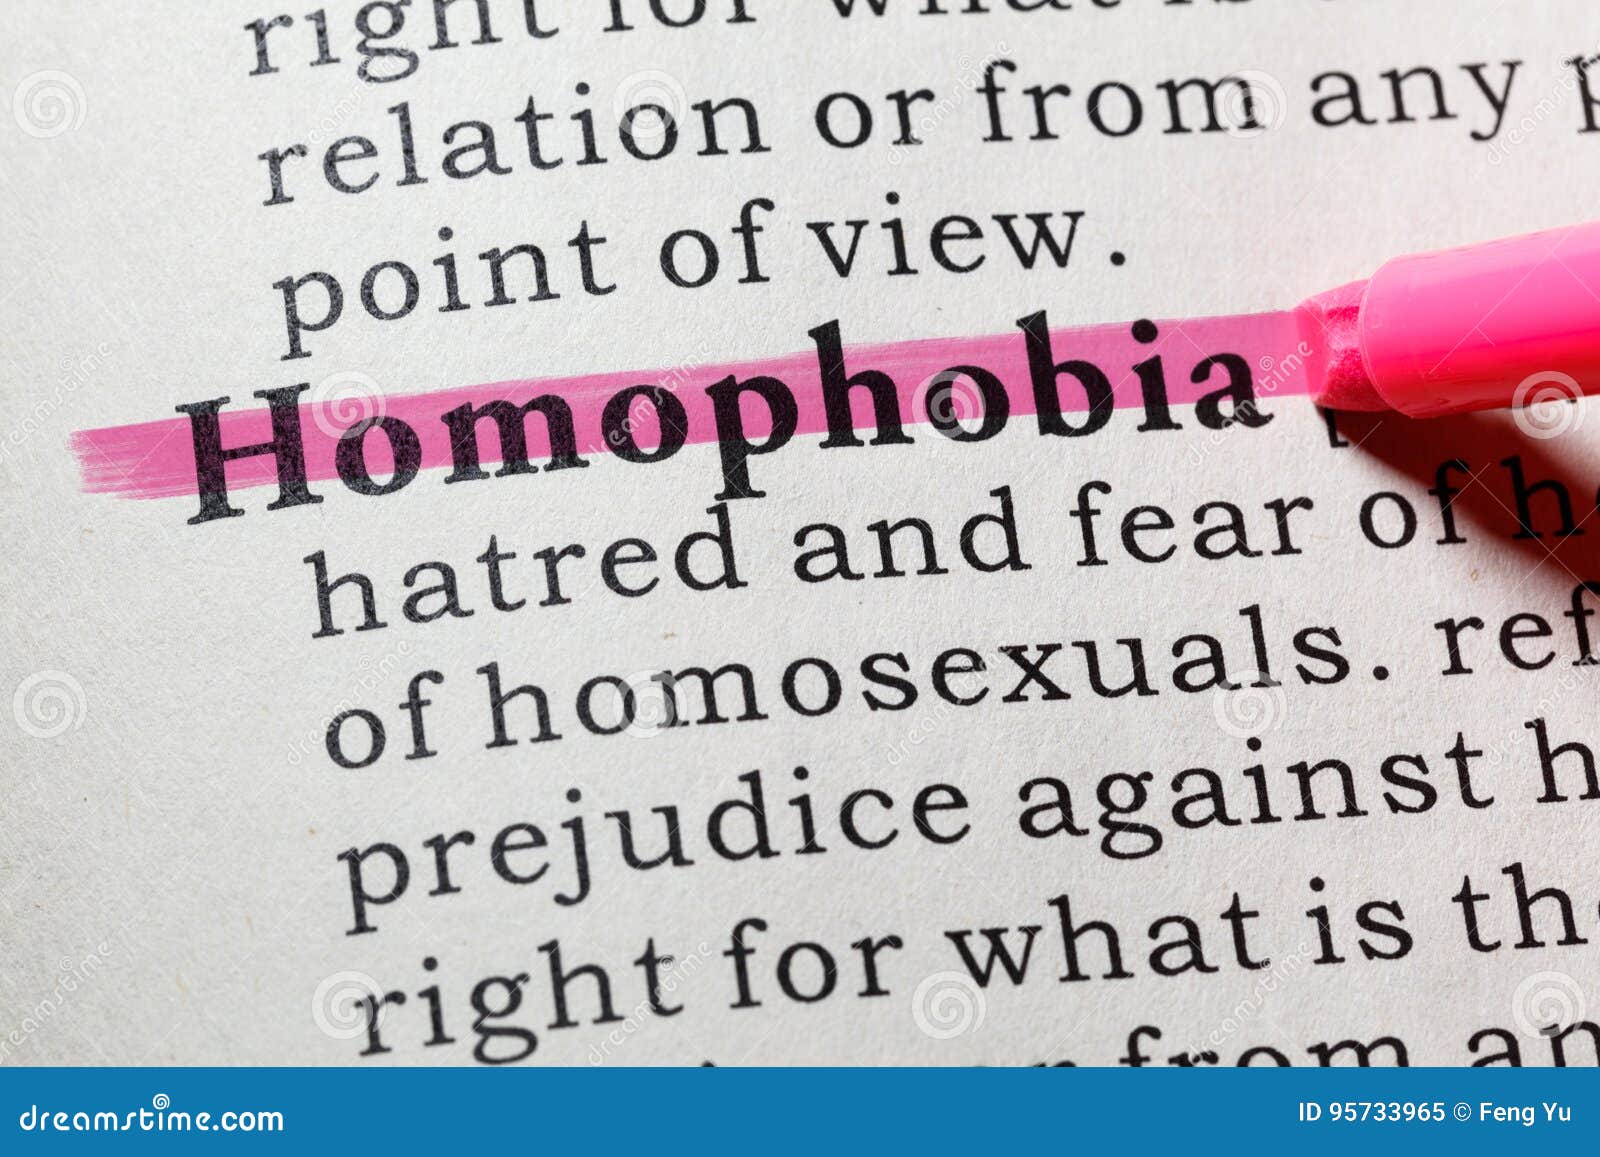 definition of homophobia